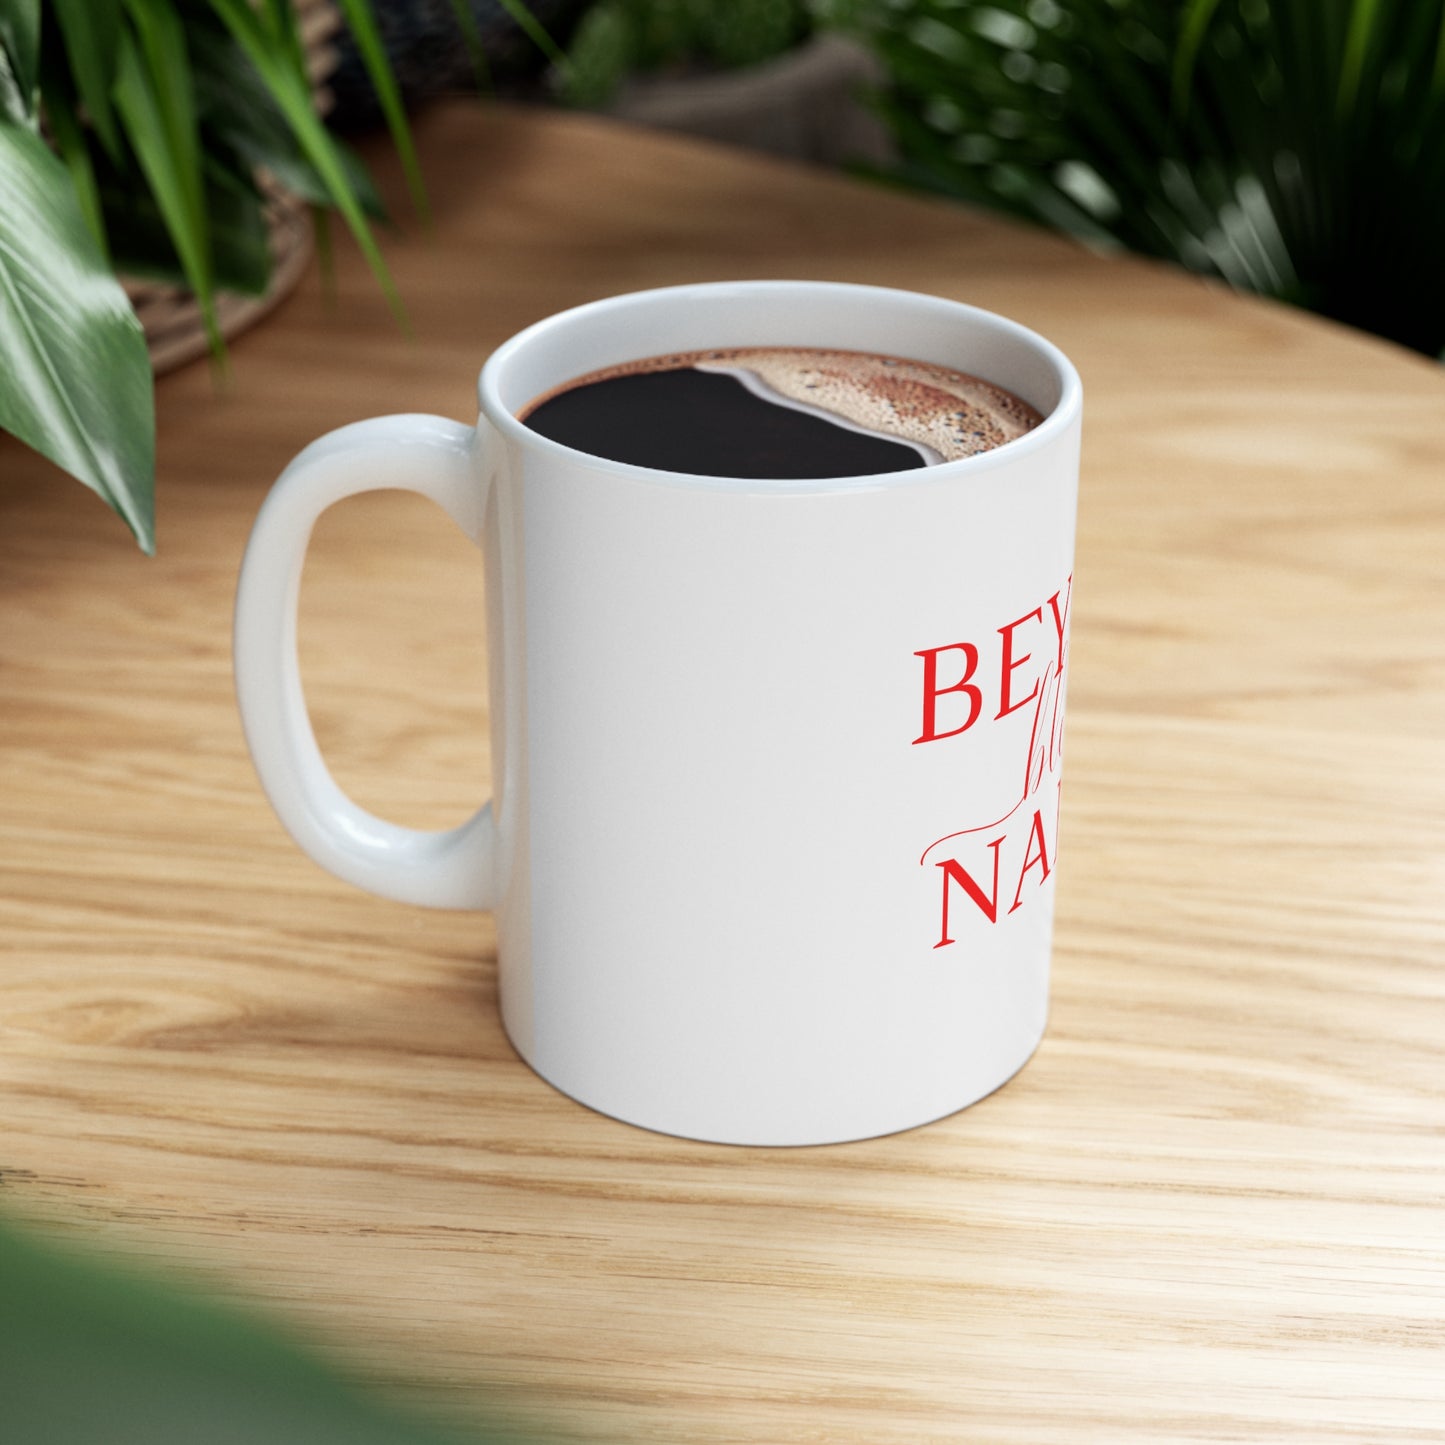 Beyond Blessed Nanny - Plain Ceramic Mug 11oz - Red